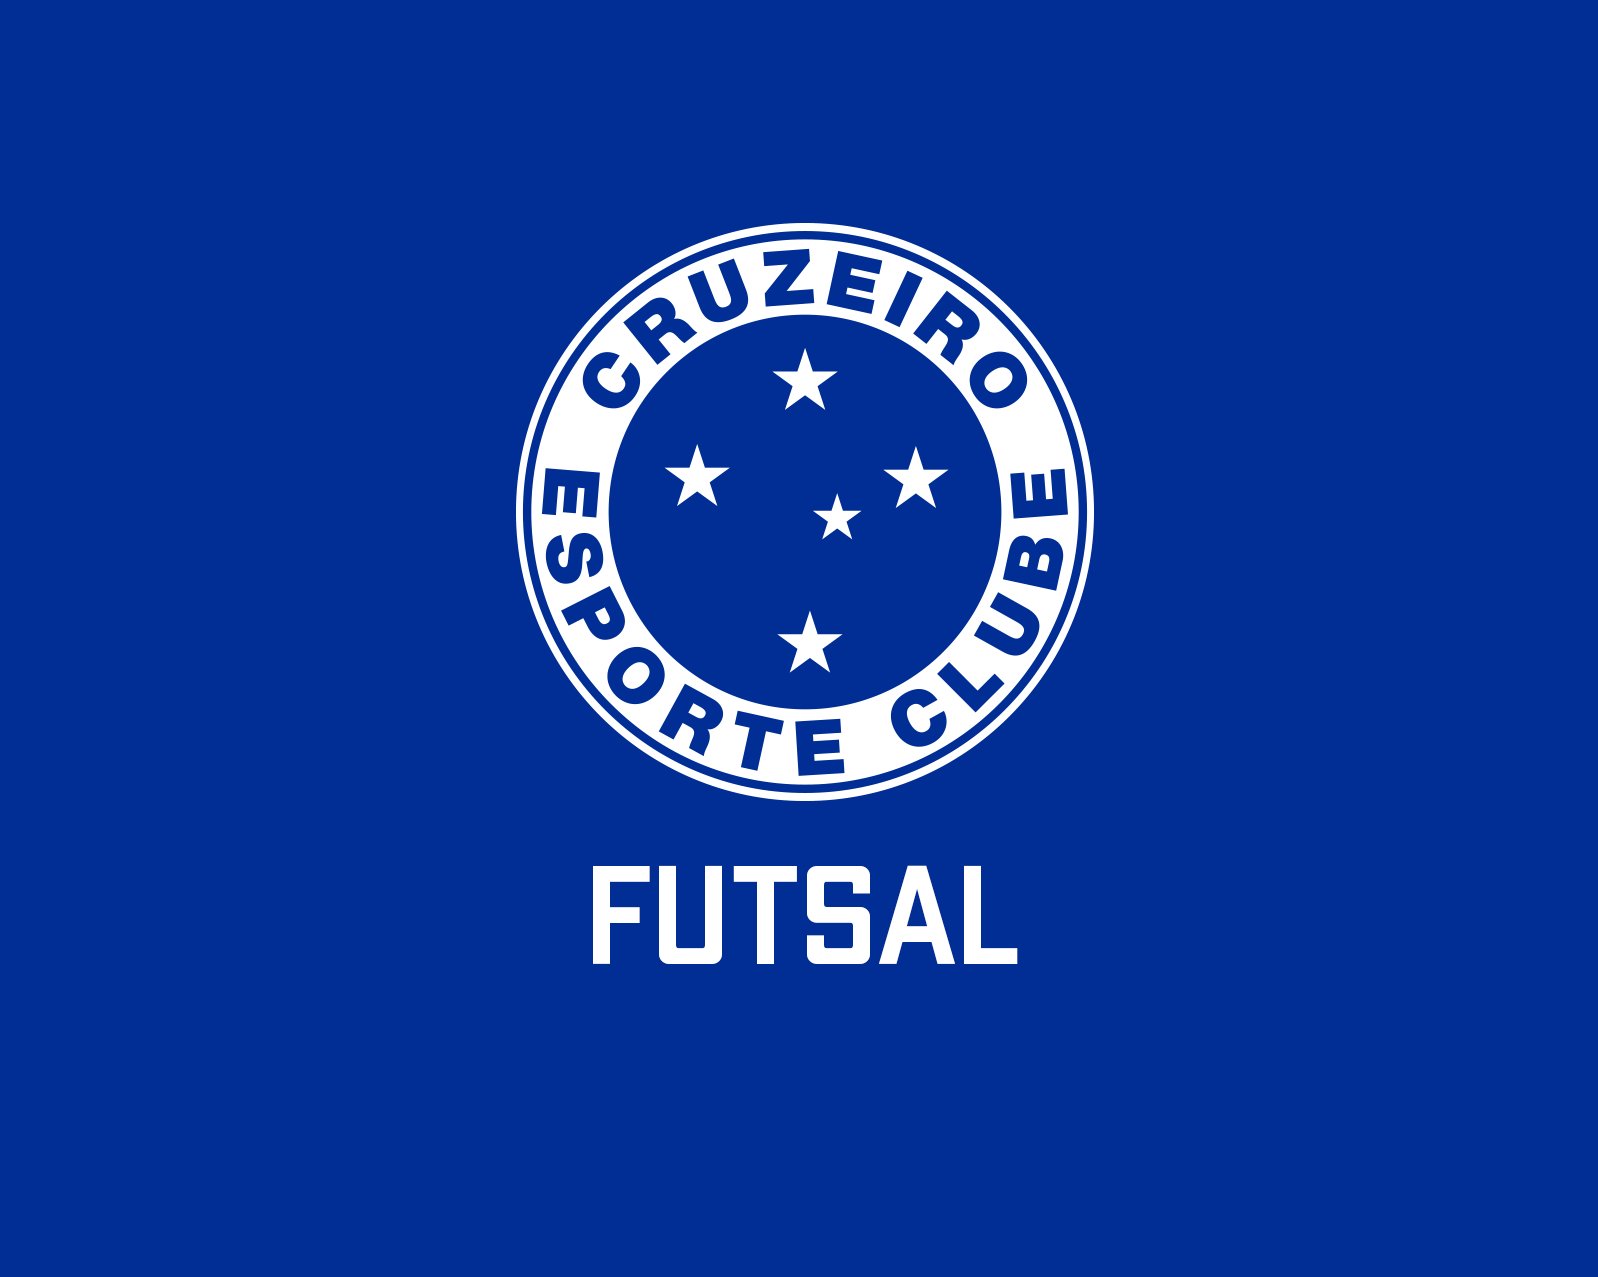 Cruzeiro Futsal